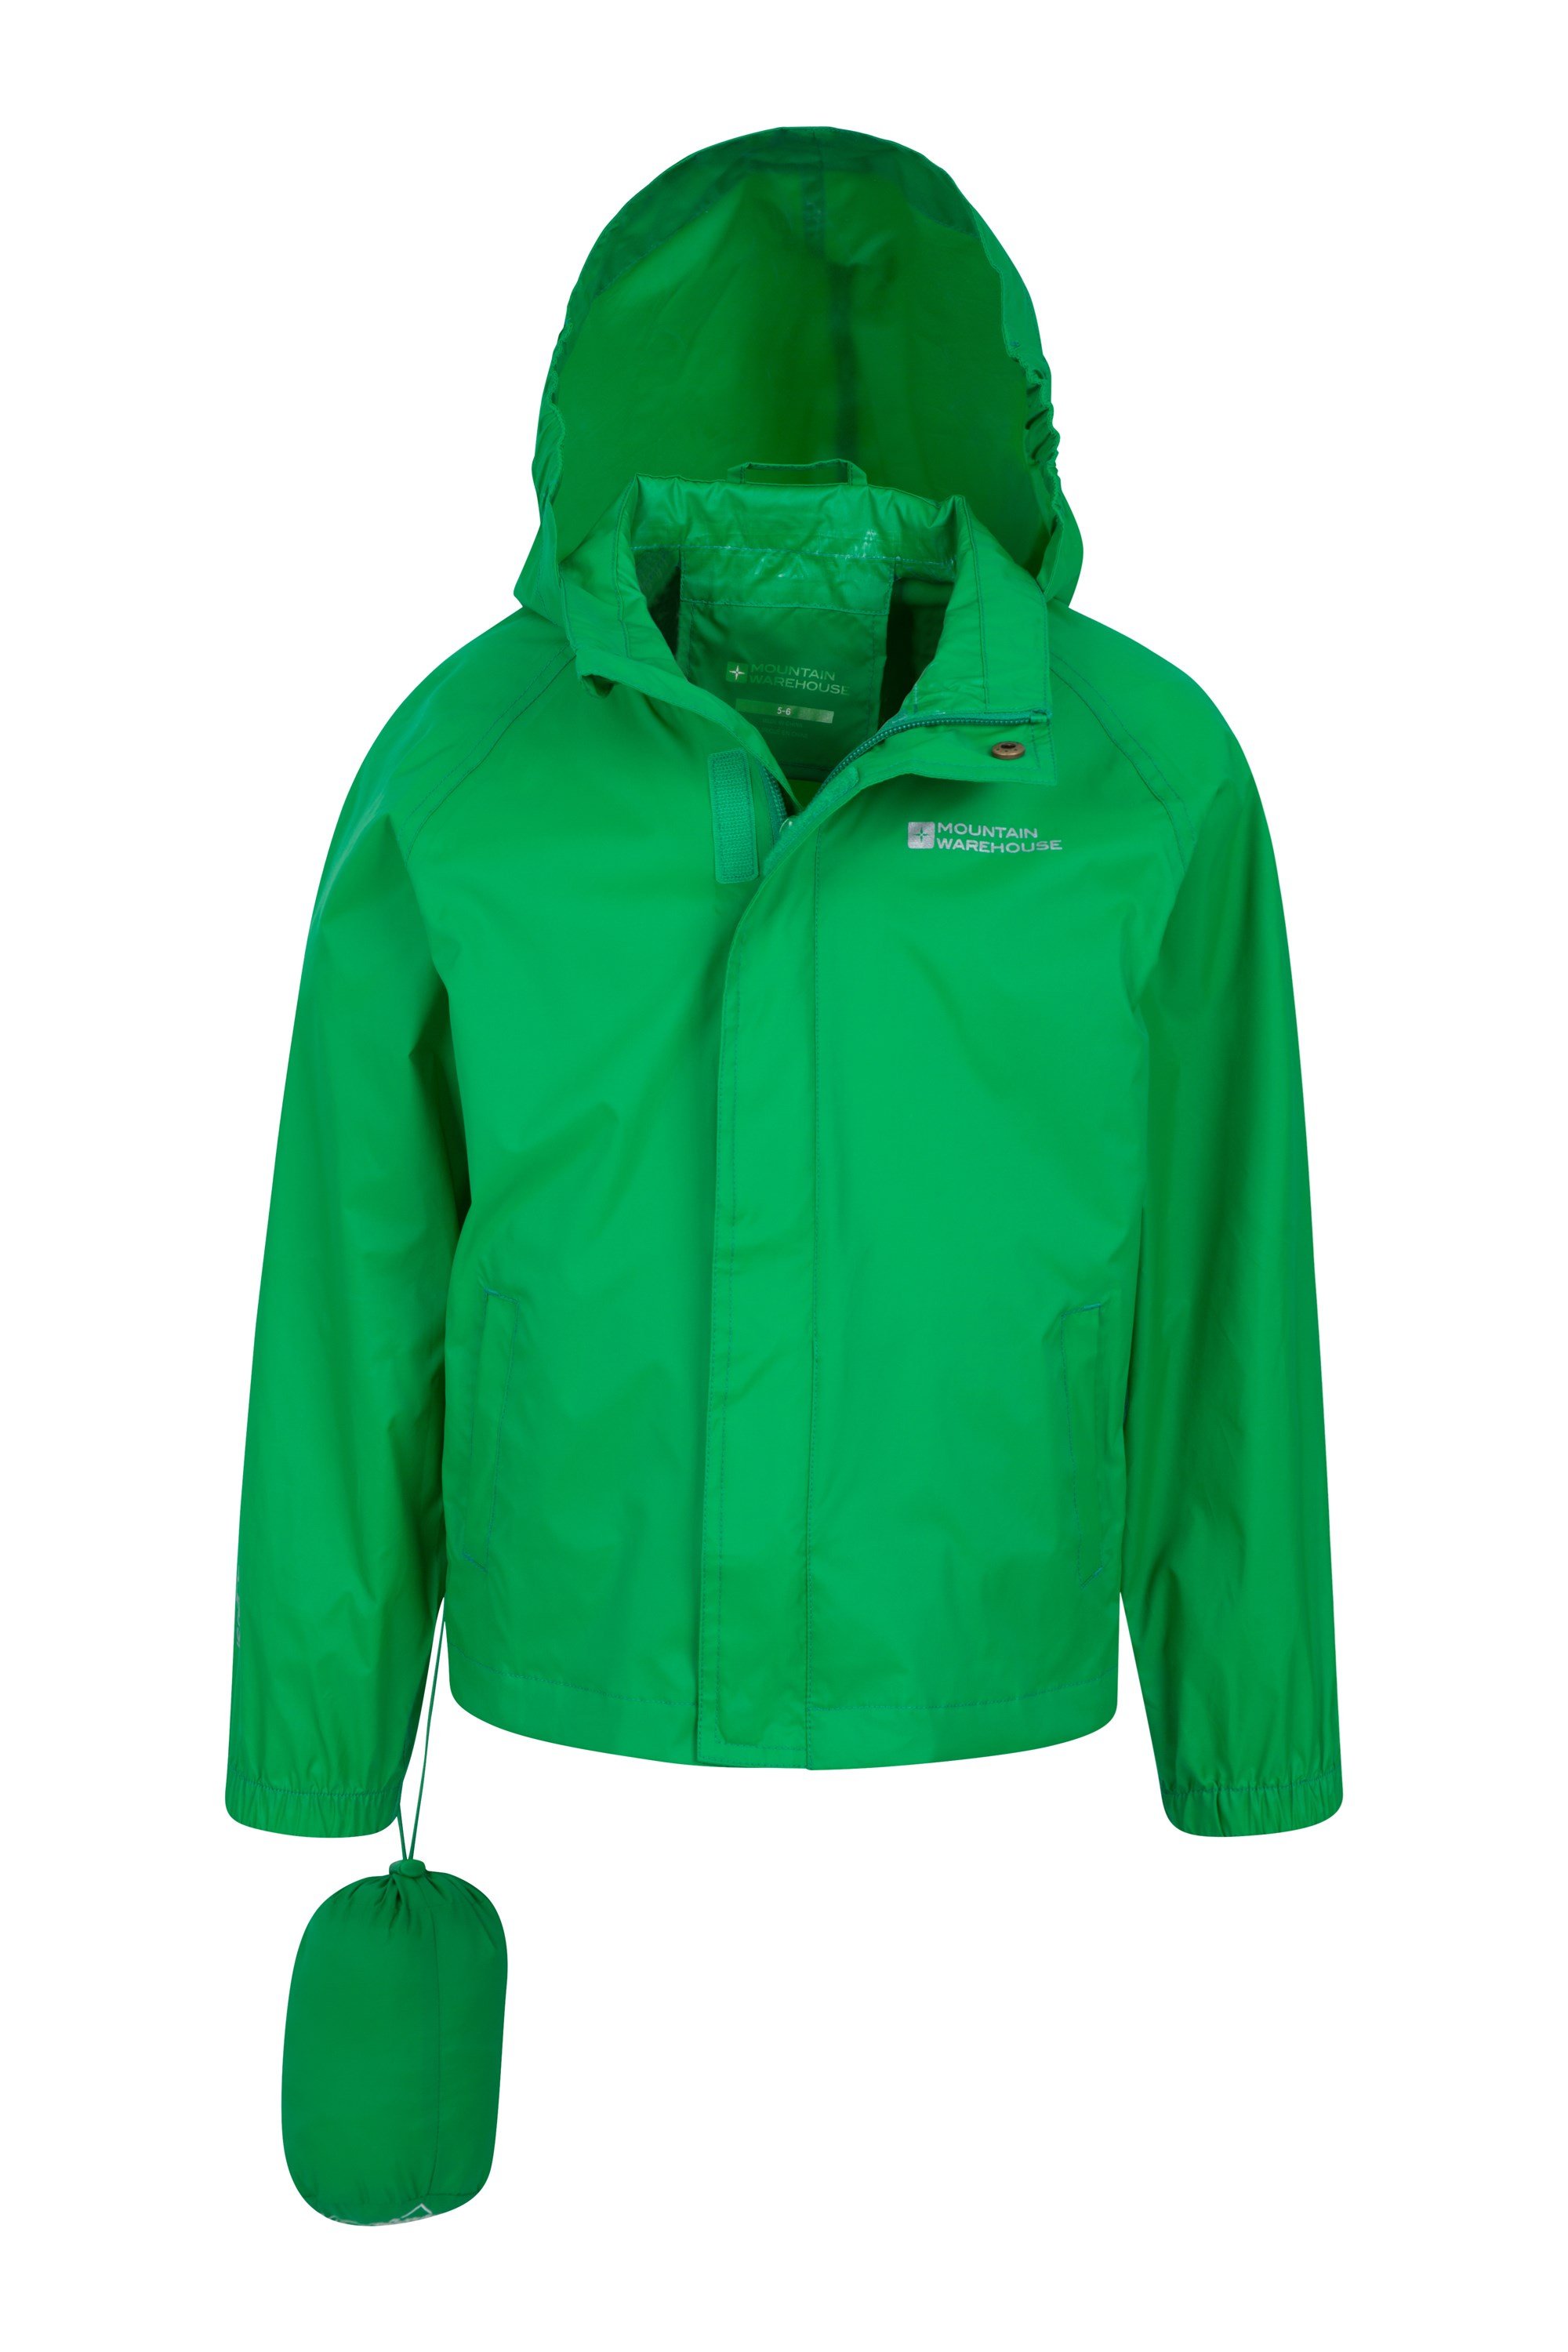 Mountain Warehouse Kids Pakka Jacket Waterproof Breathable with Taped Seams 